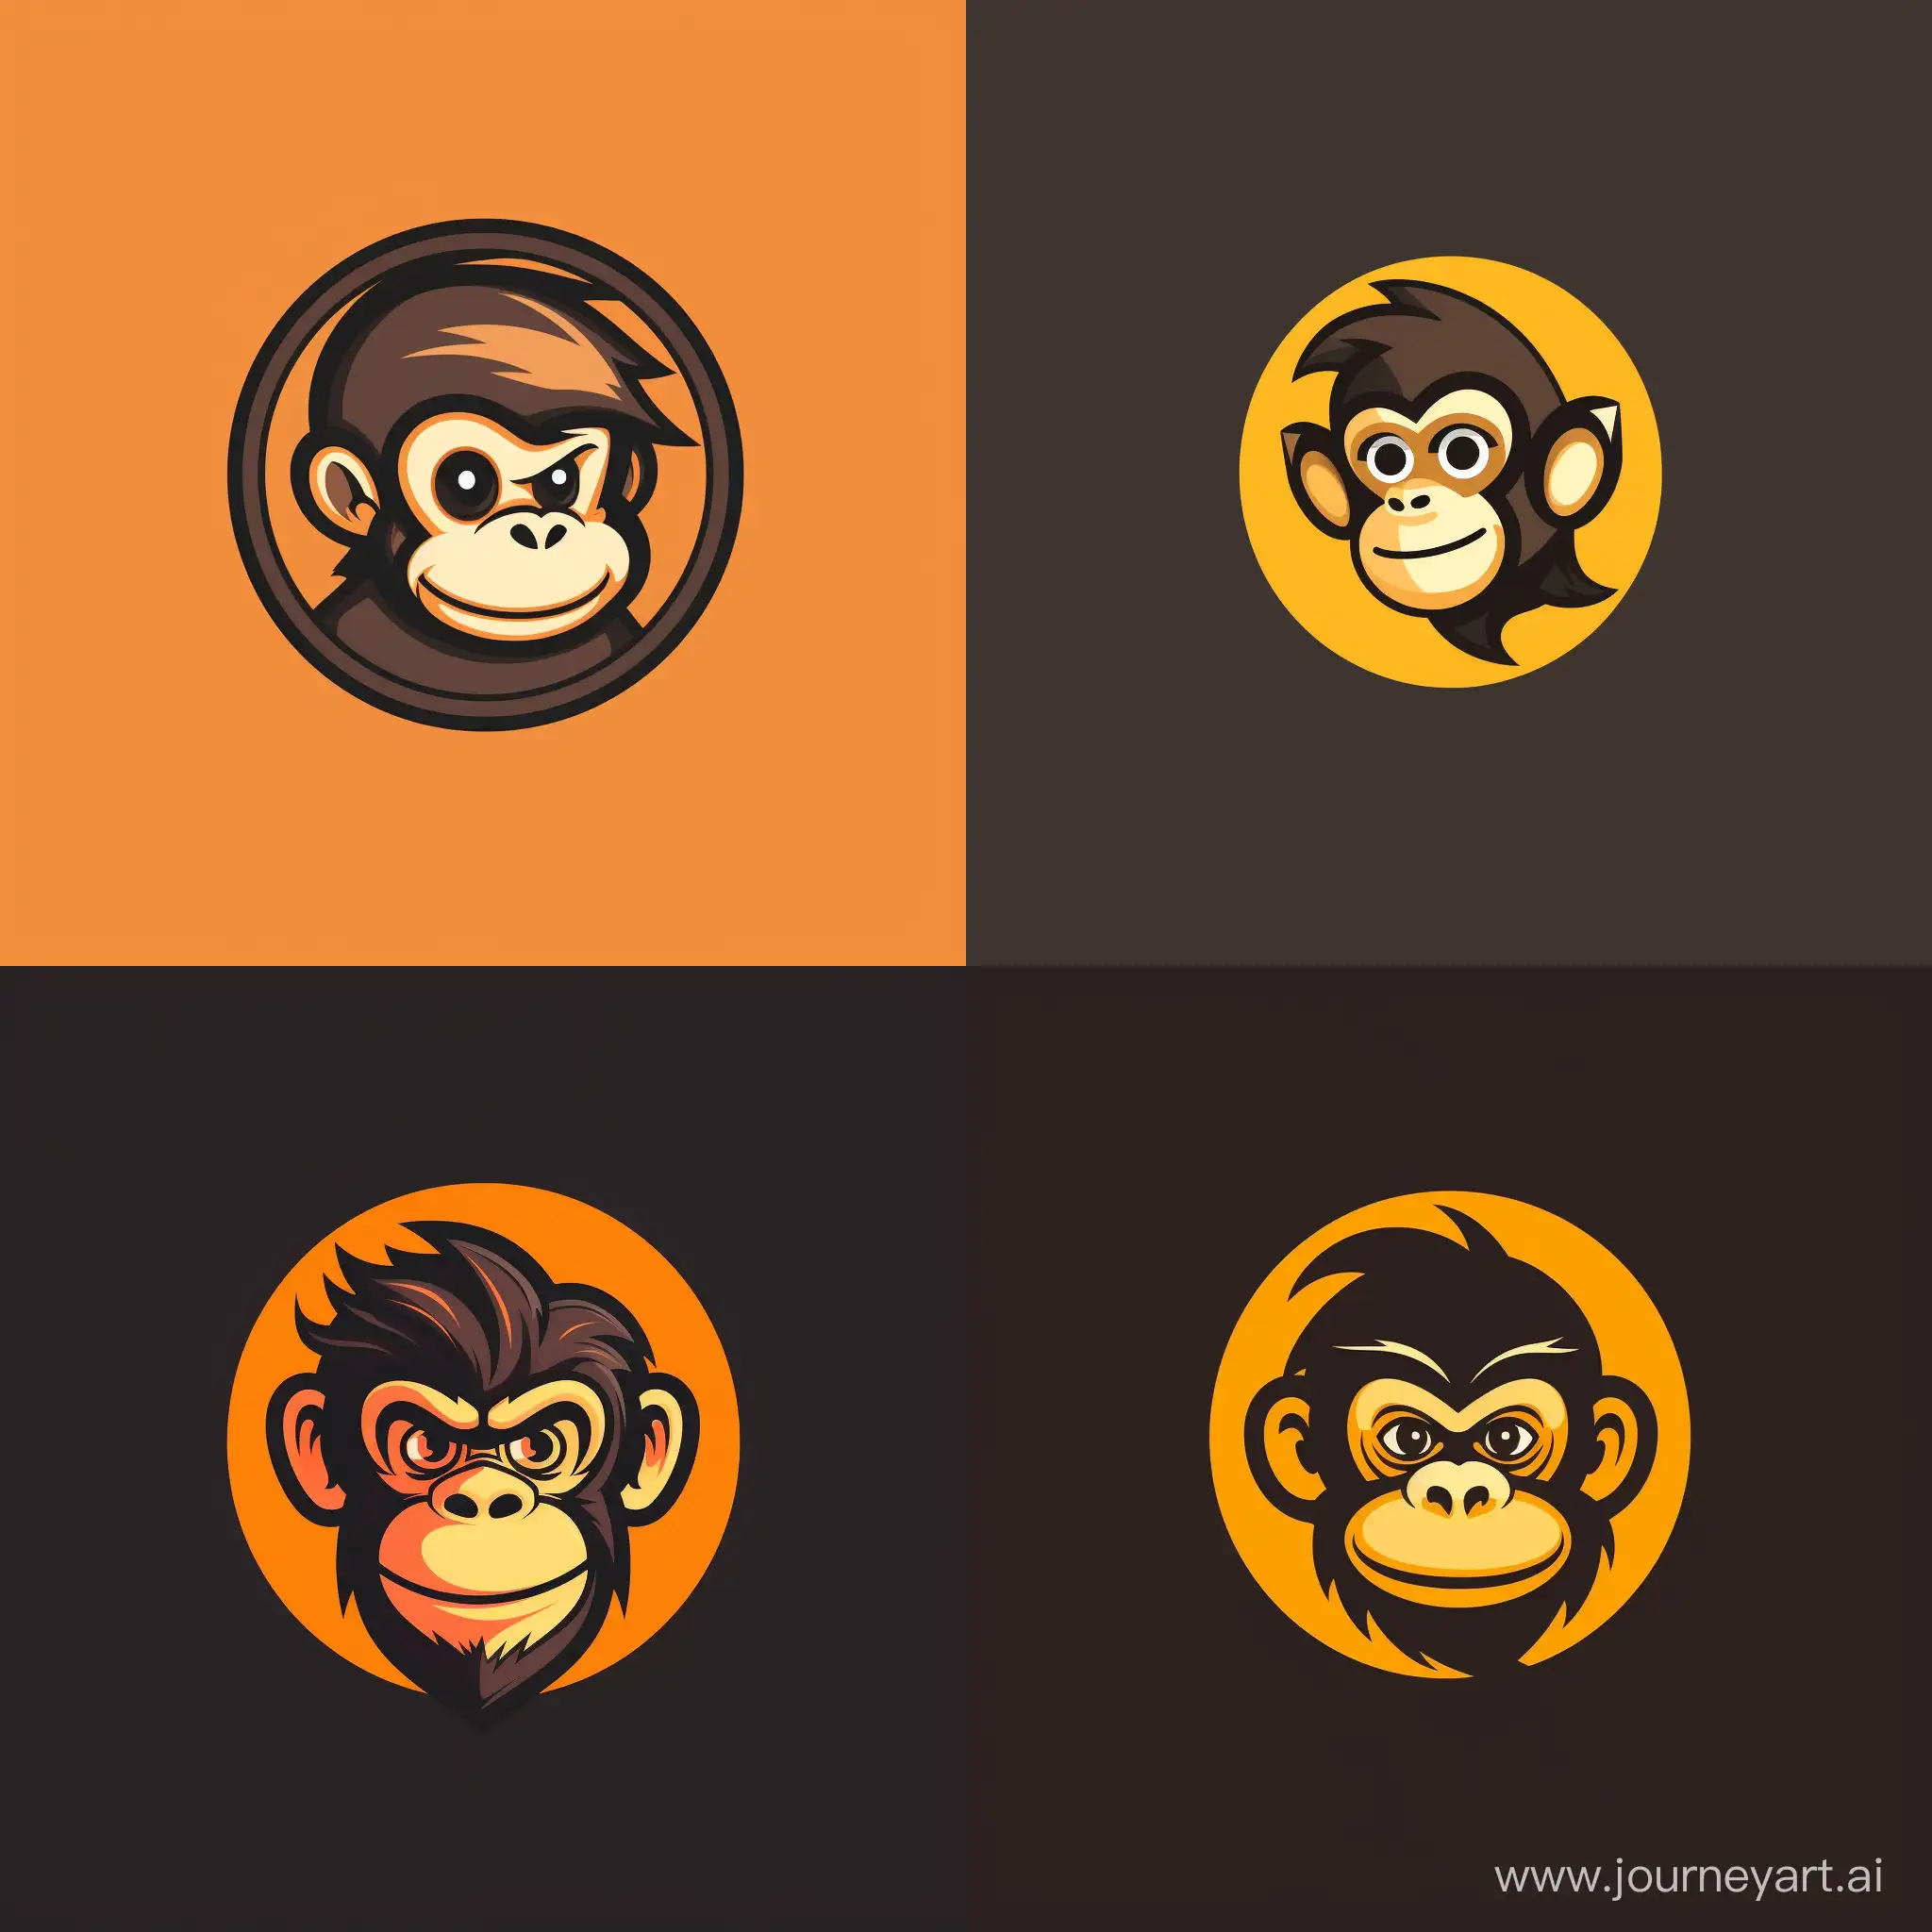 Playful-and-Minimalist-Monkey-Logo-Design